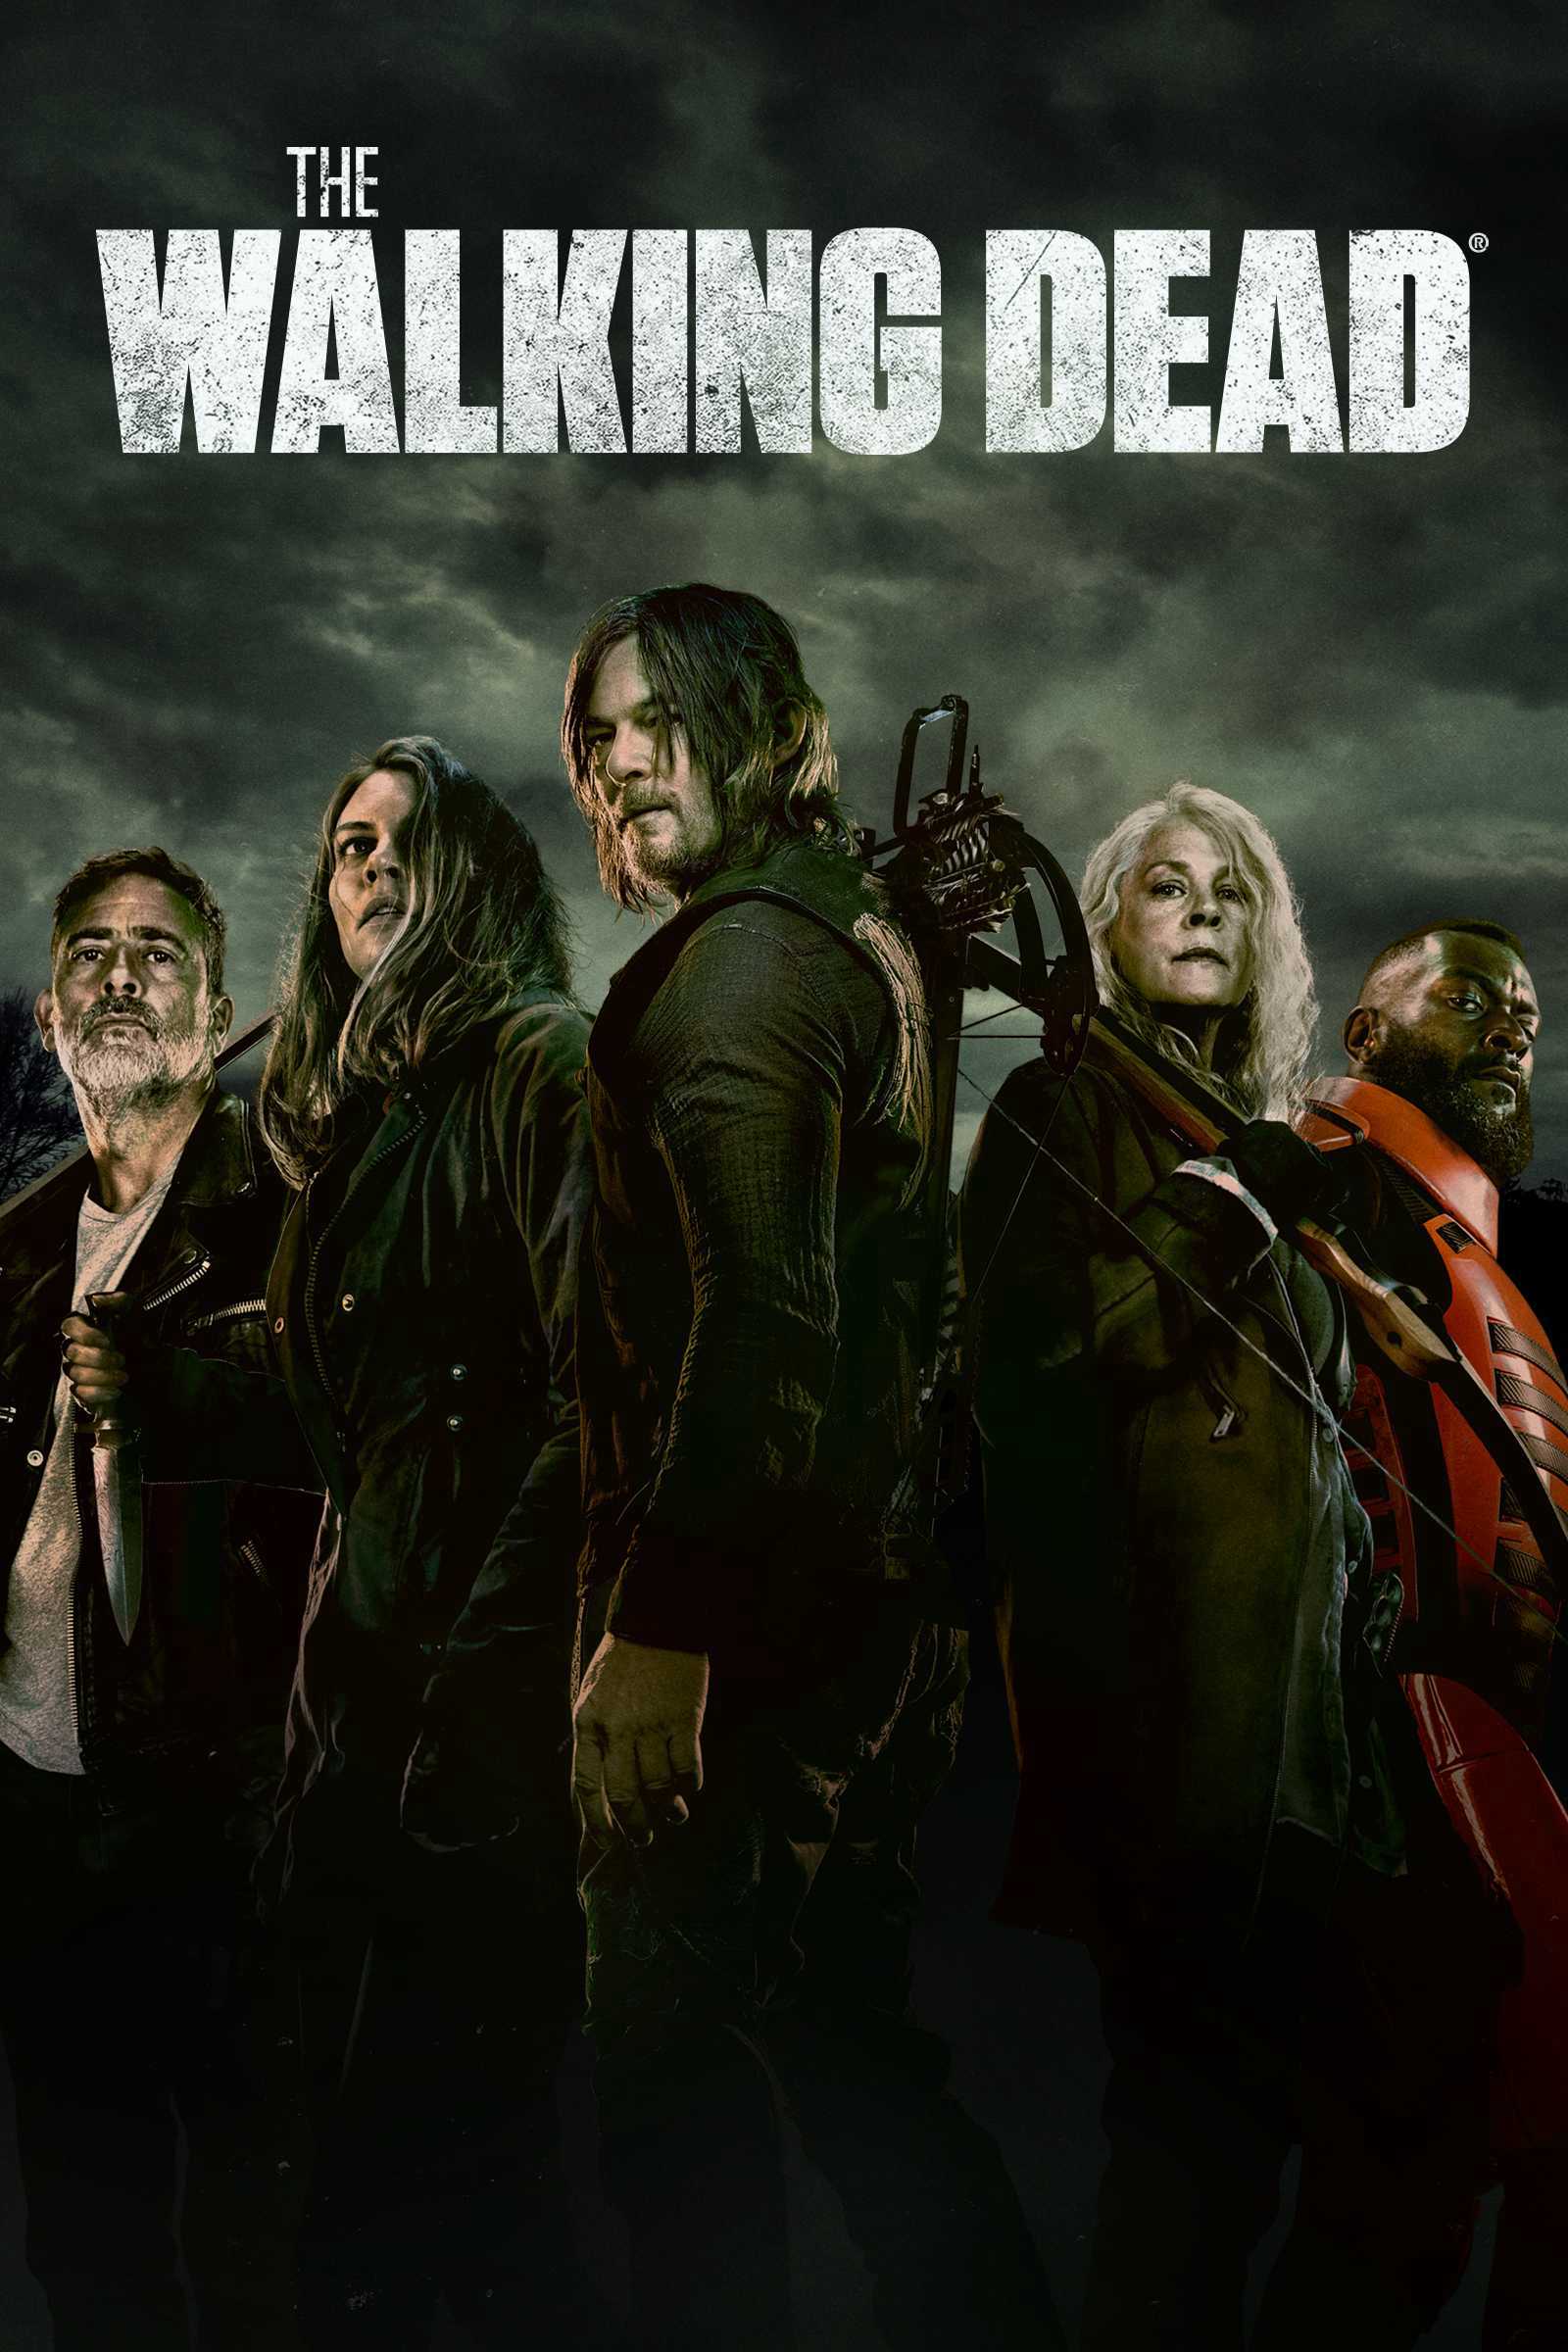 Xác Sống (Phần 11) - The Walking Dead (Season 11)